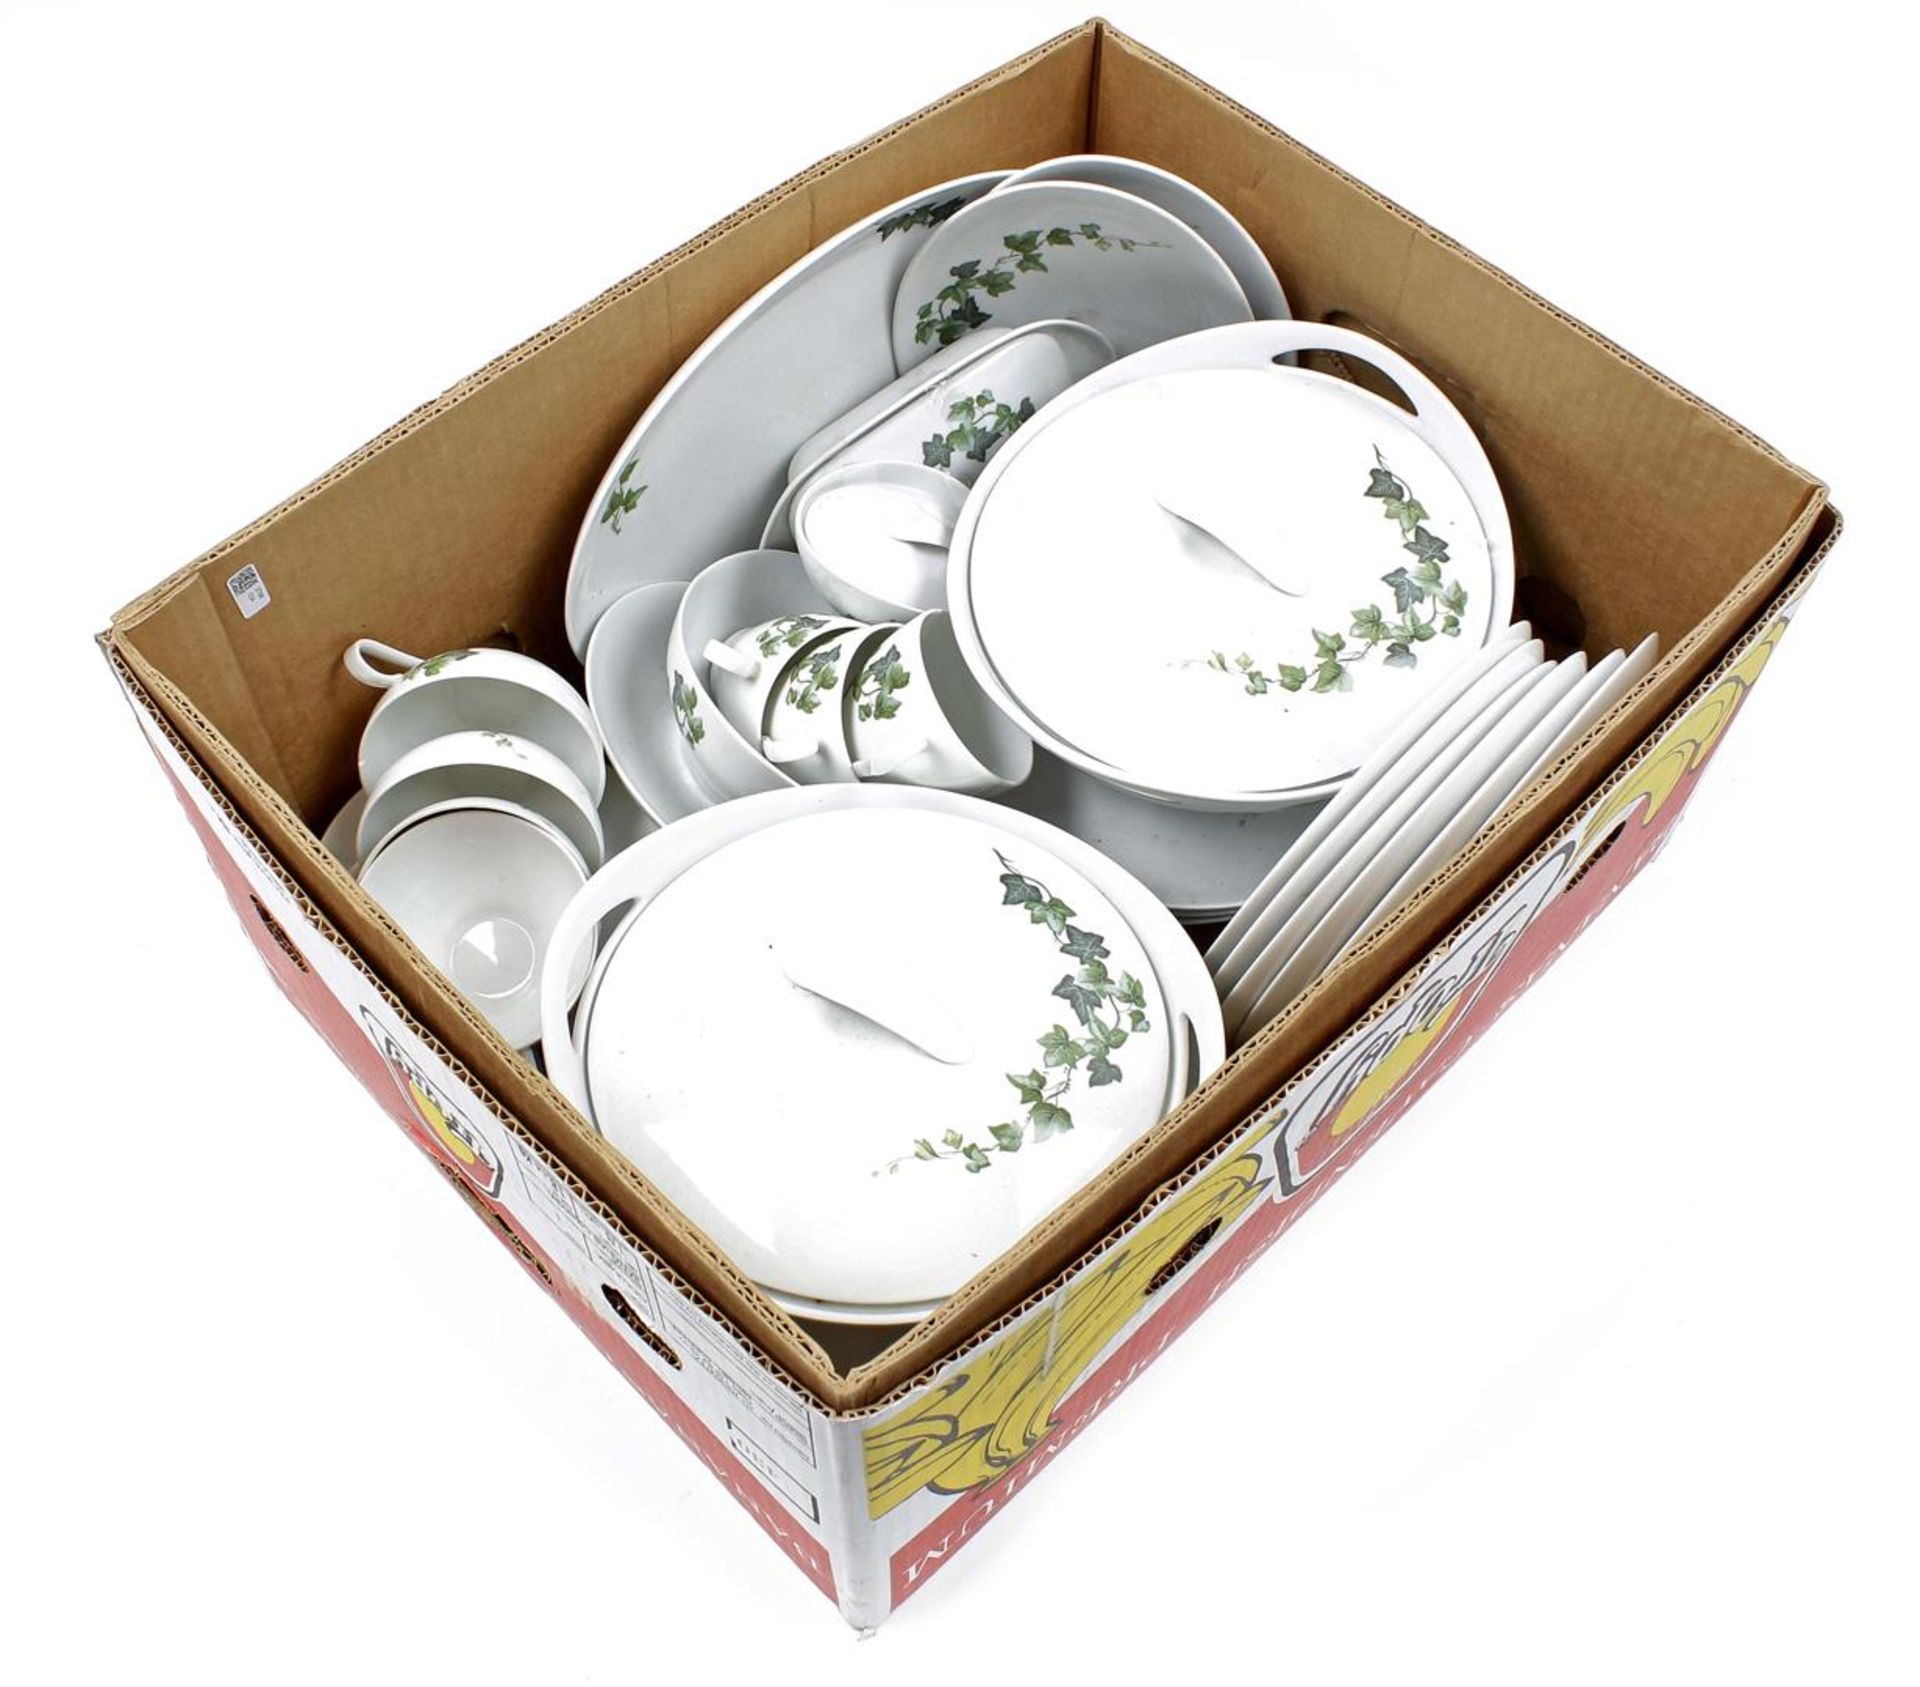 Box with Eschenbach porcelain tableware